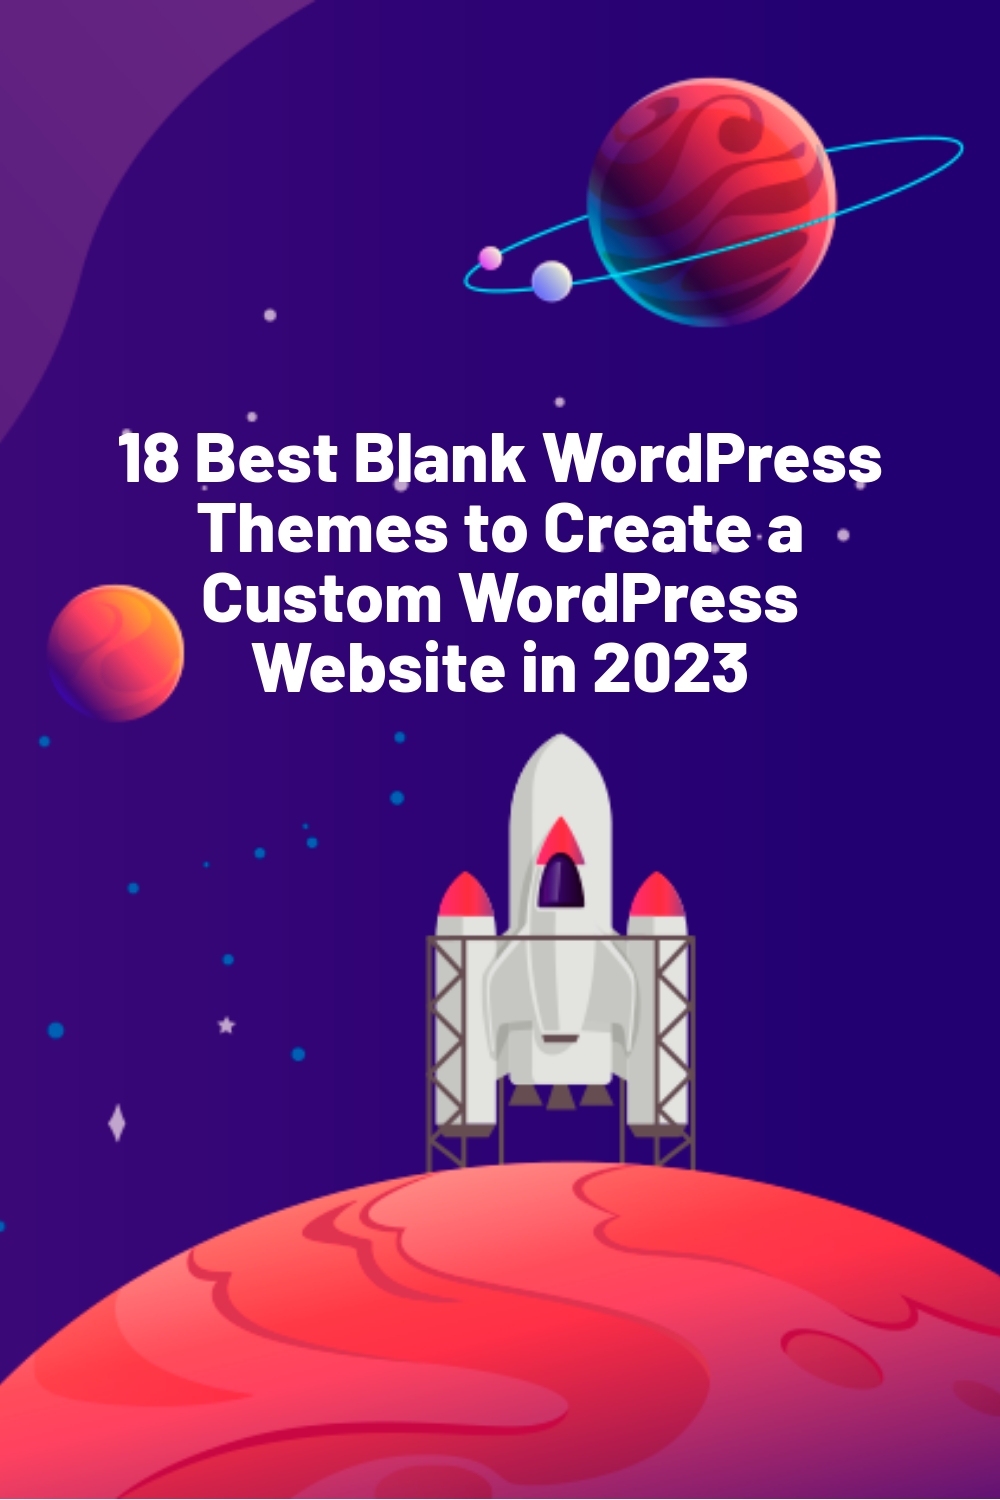 18 Best Blank WordPress Themes to Create a Custom WordPress Website in 2023